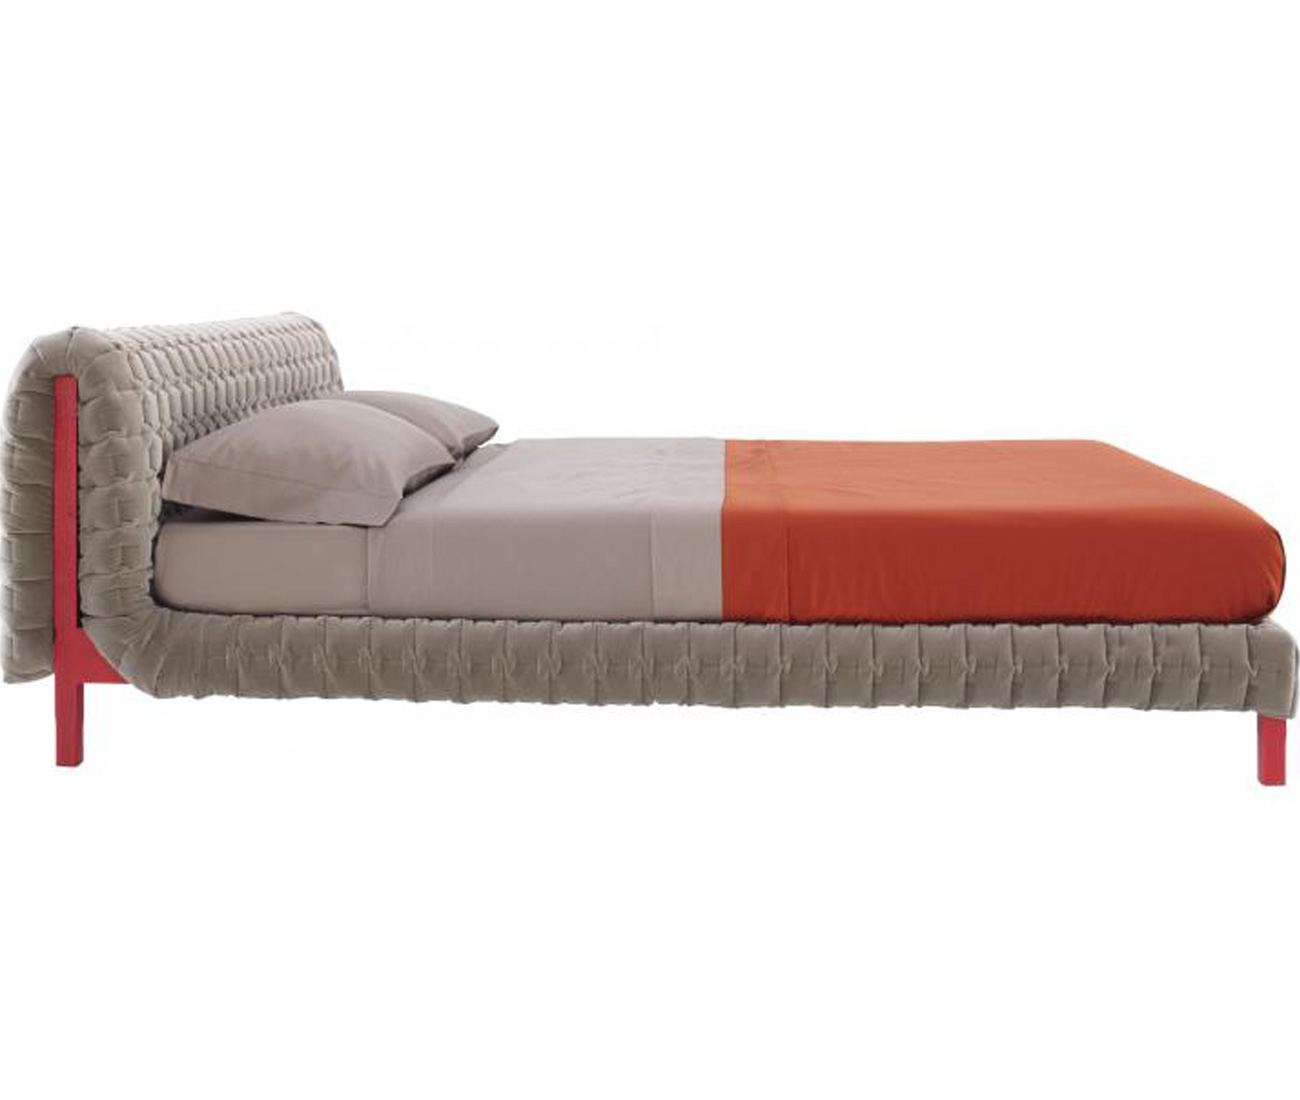 Bed from Ligne Roset